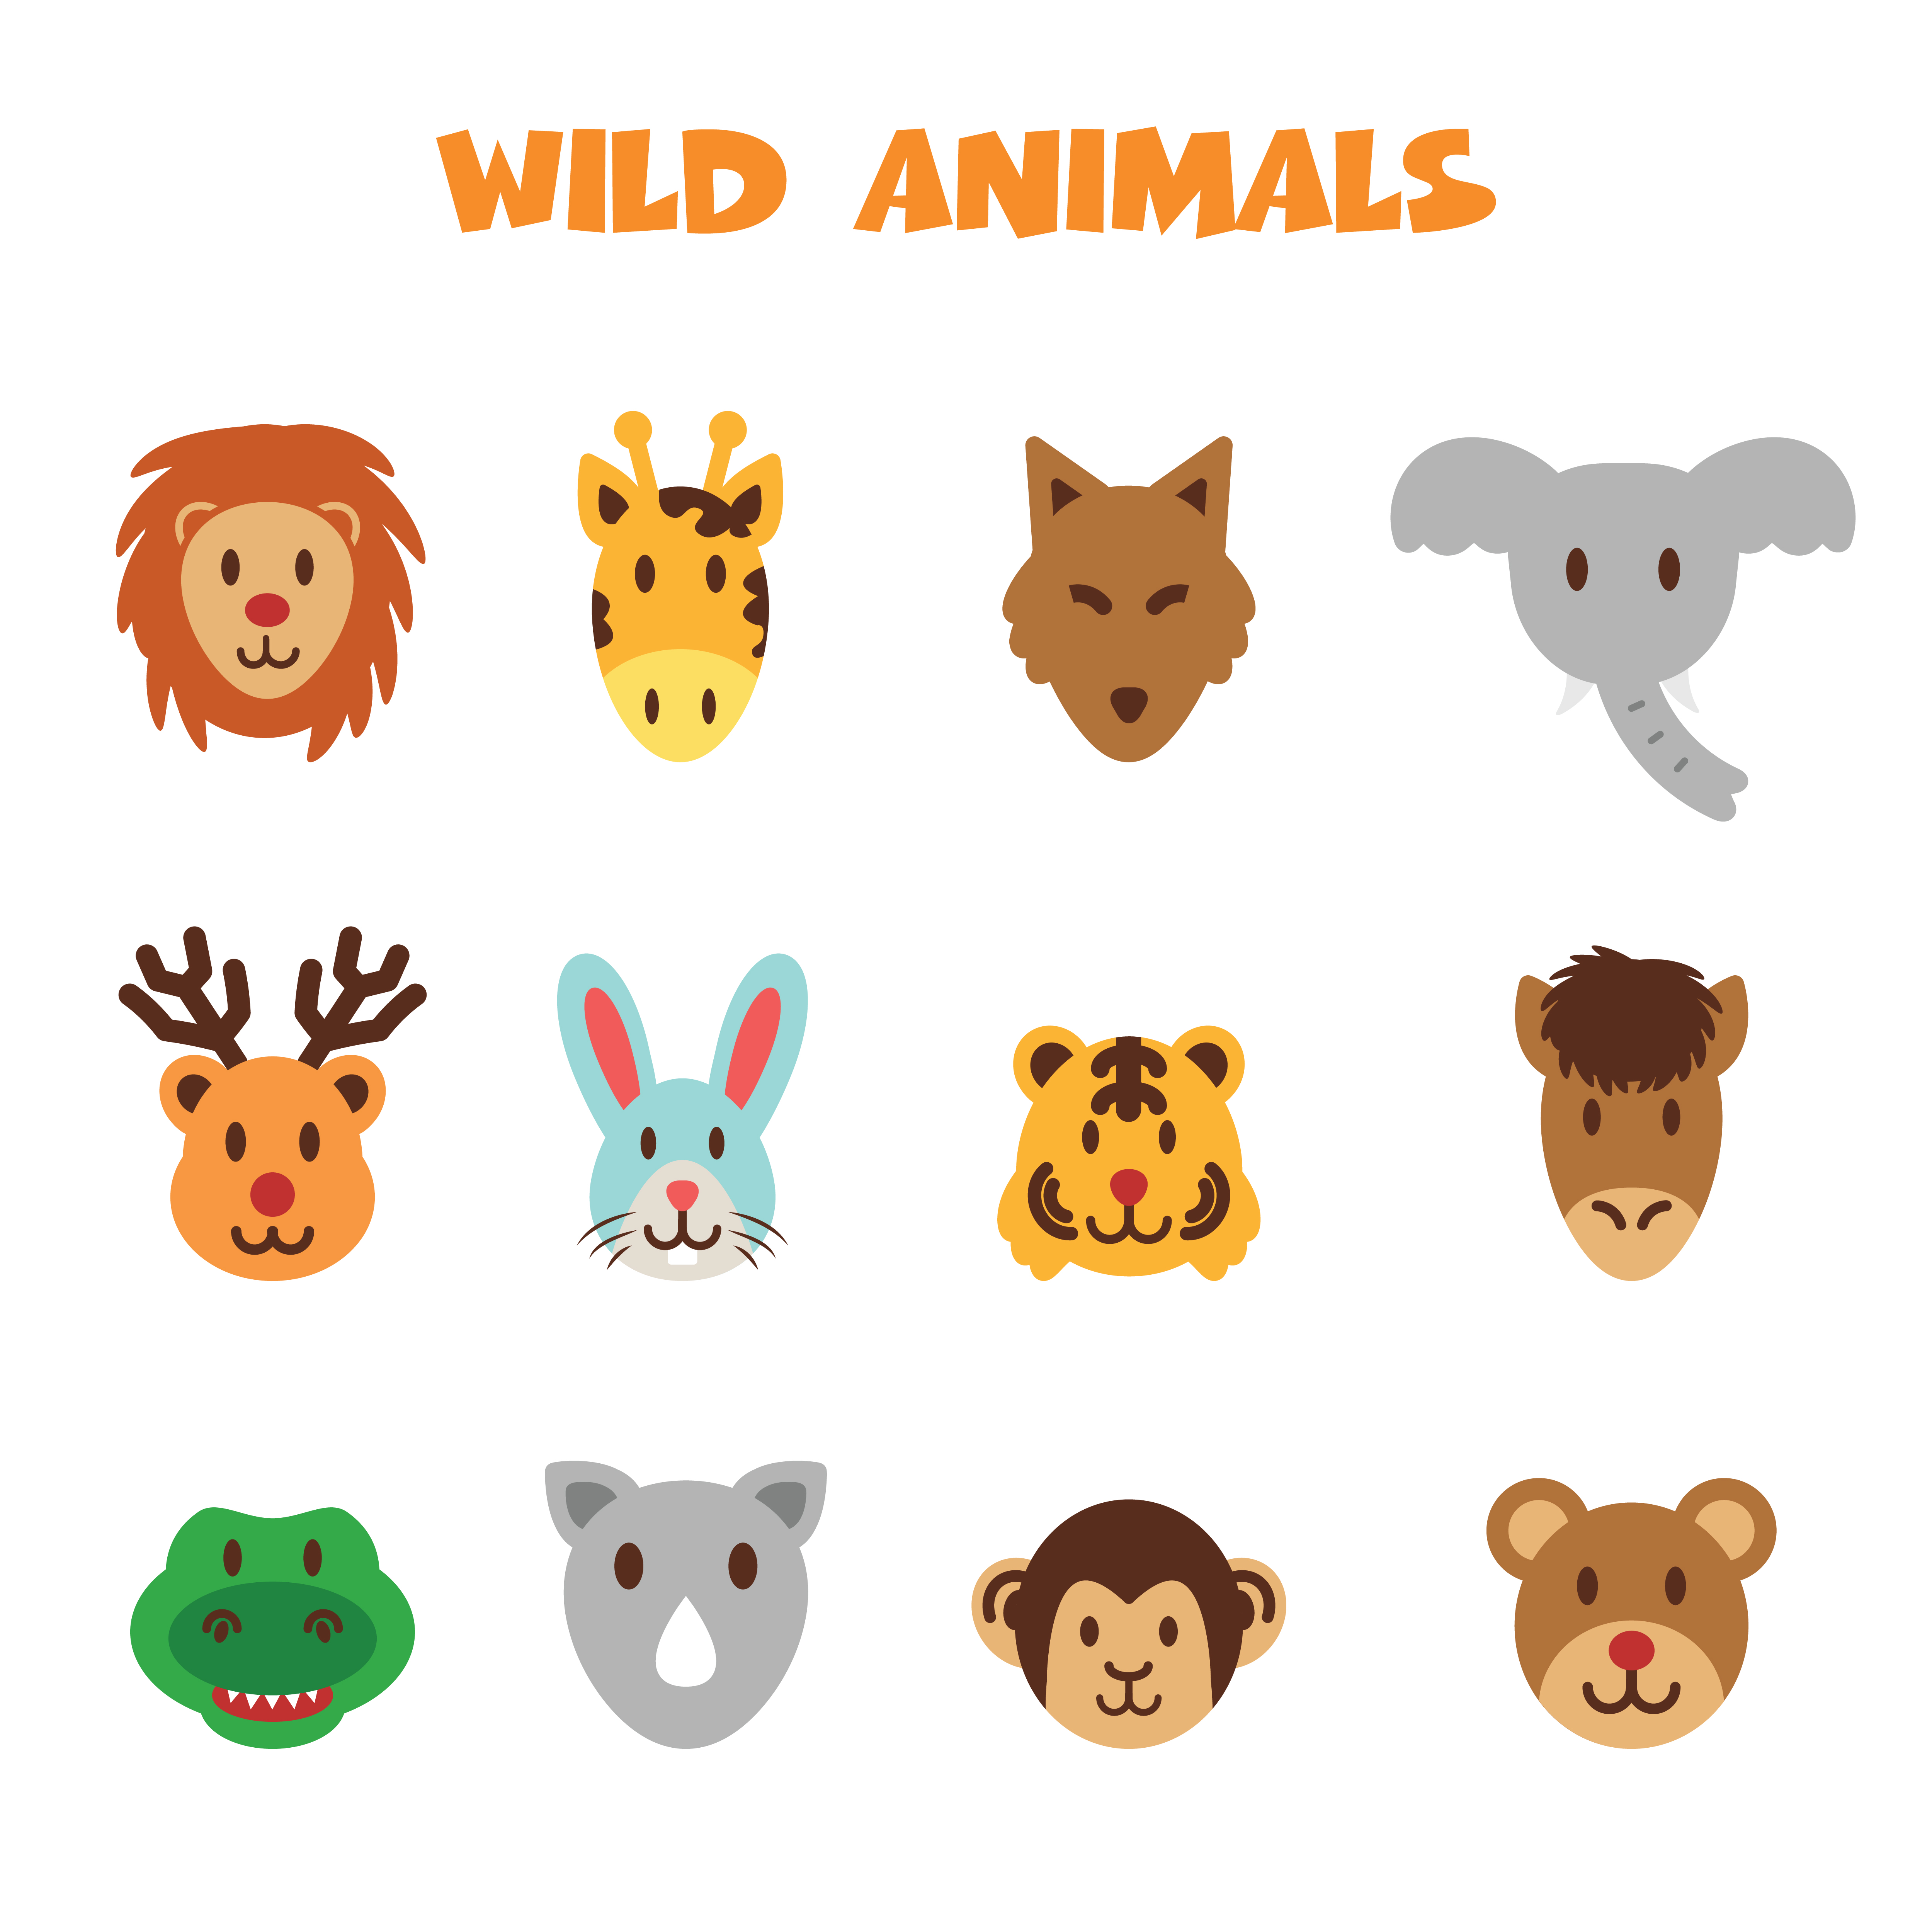 Download wild animal icons 650197 - Download Free Vectors, Clipart Graphics & Vector Art